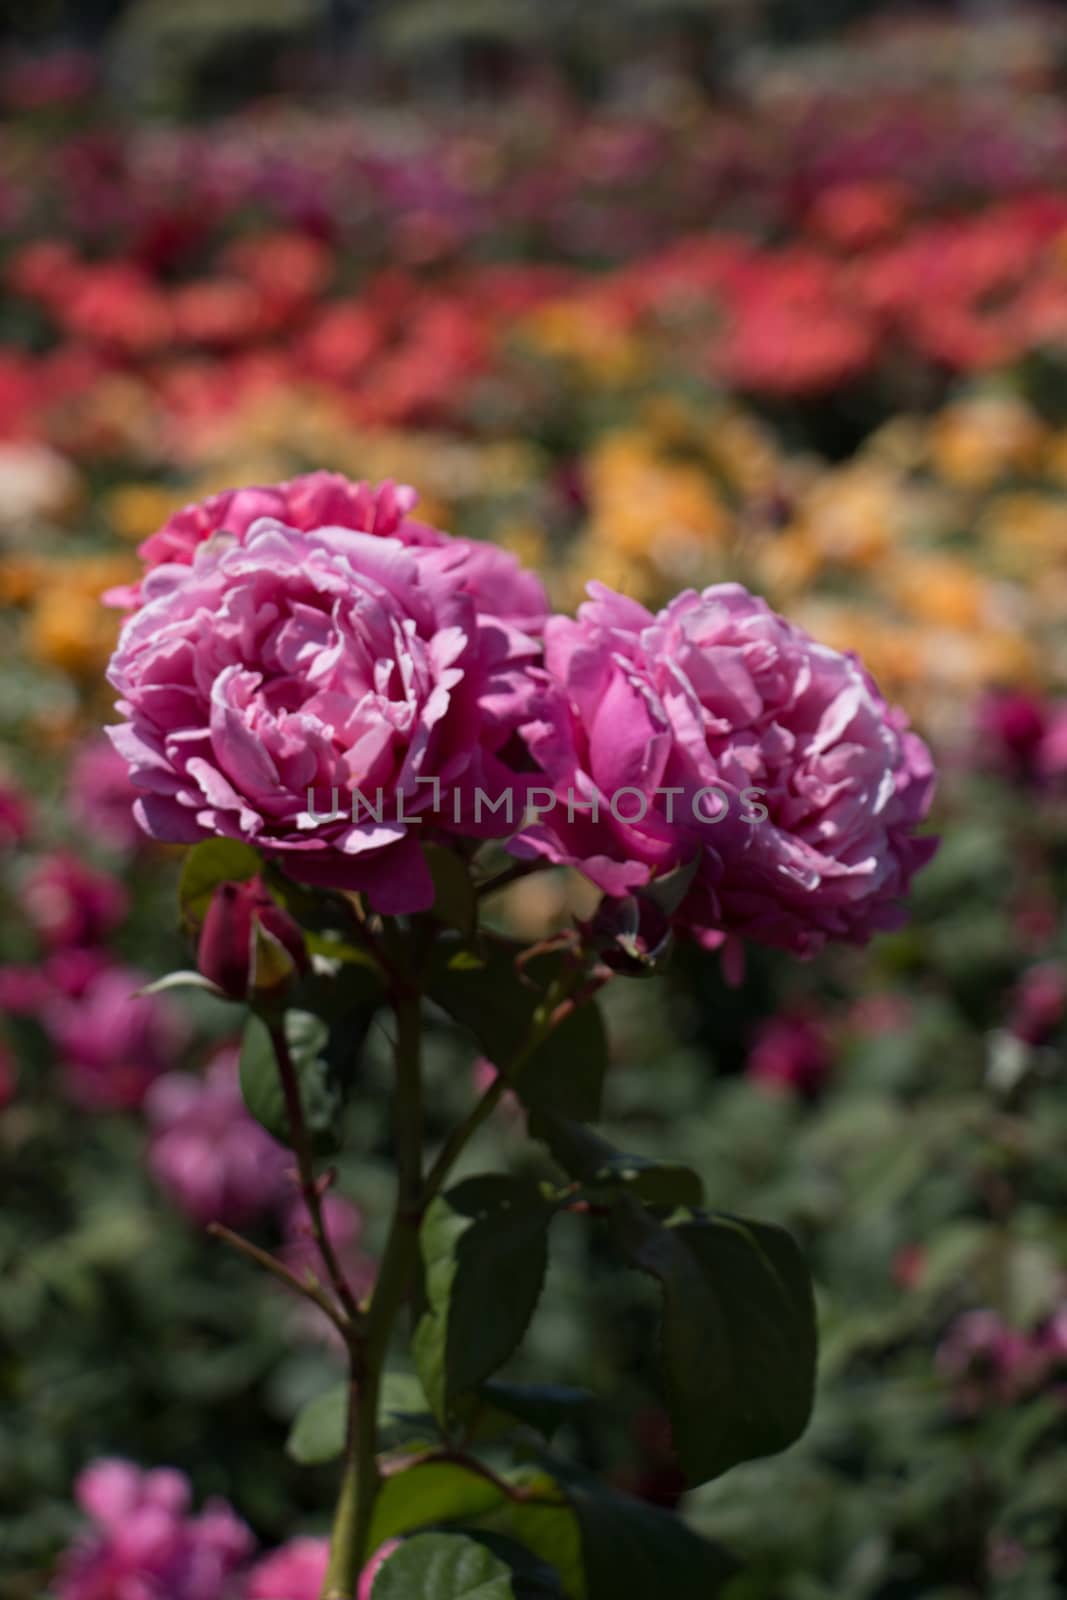 Rose garden with beautiful fresh roses by berkay